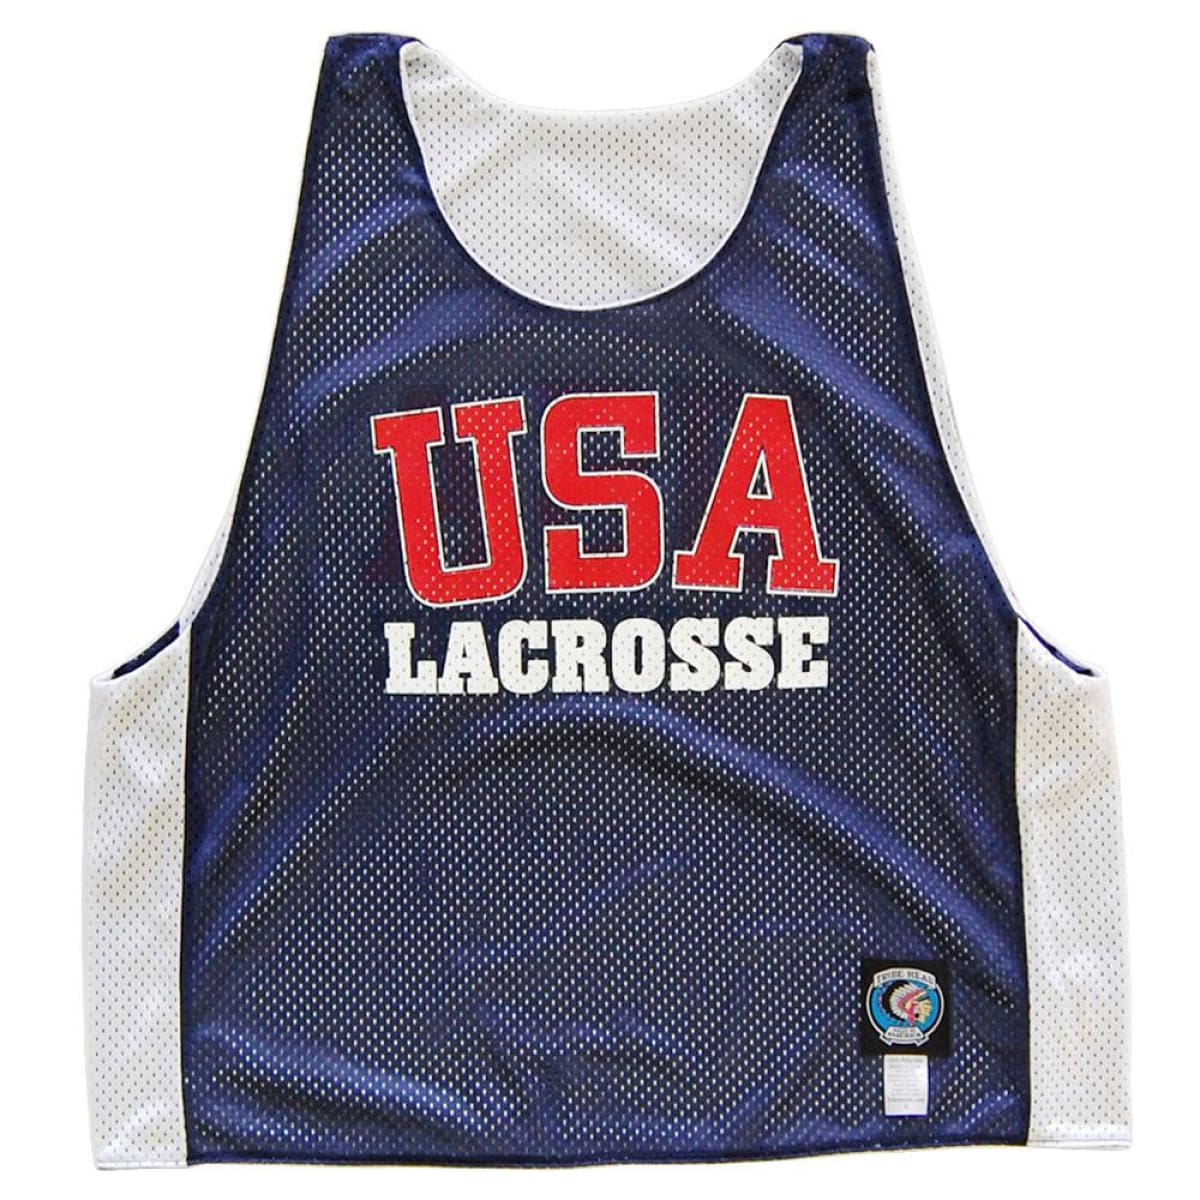 Ultras - USA Lacrosse Pinnie – Tribe Lacrosse